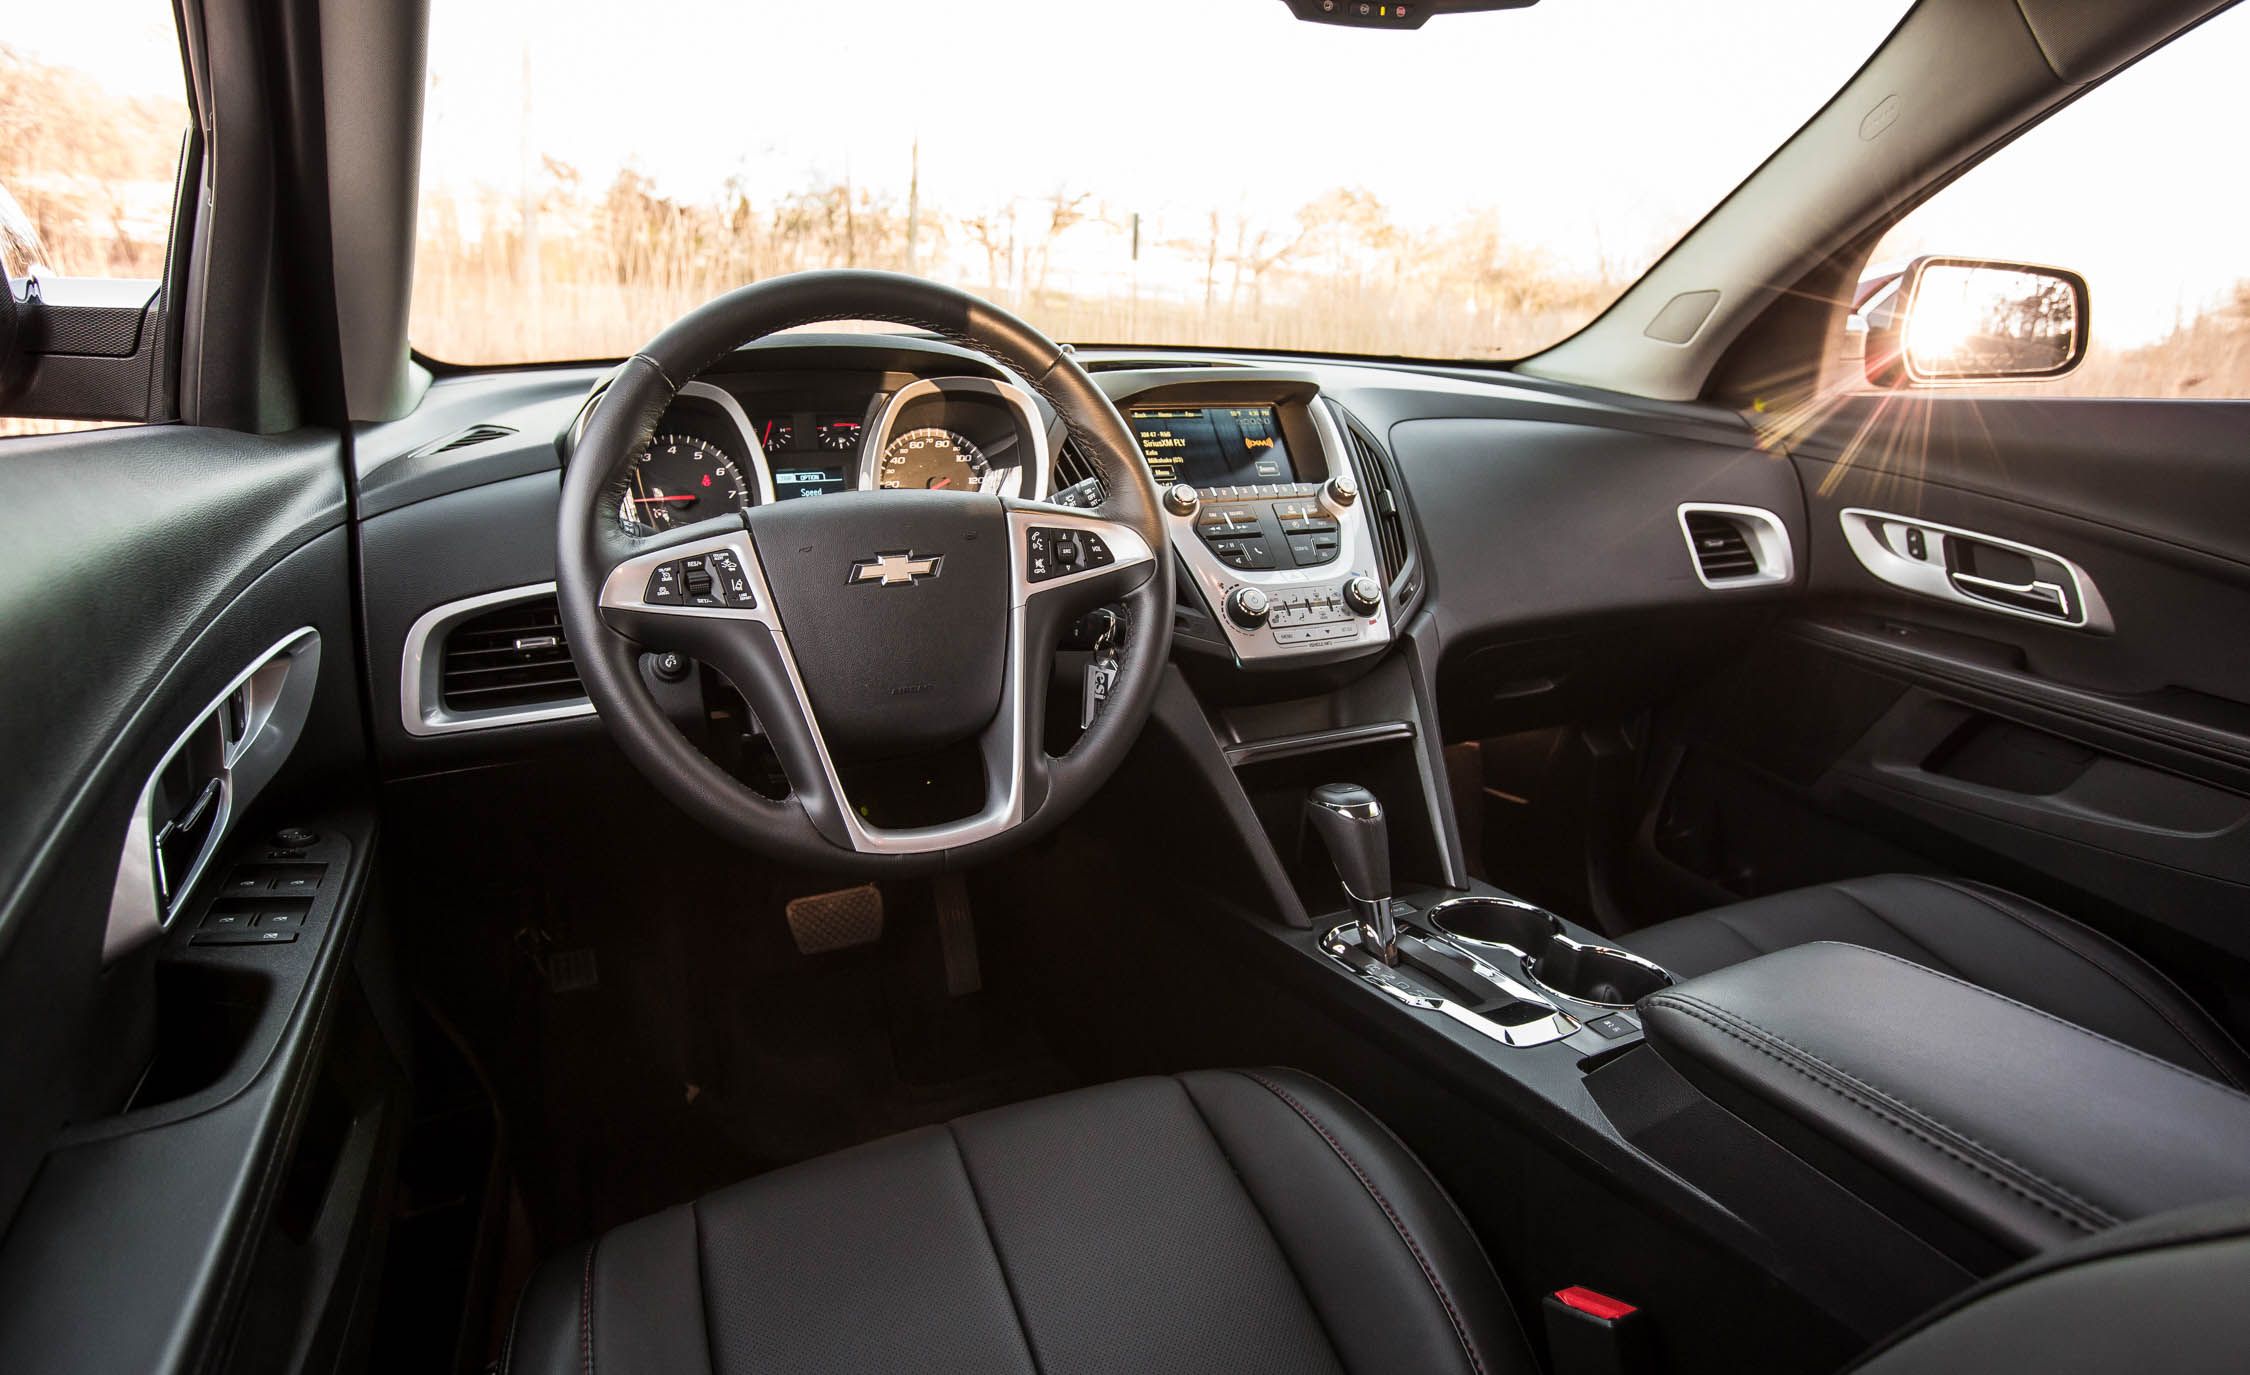 2016 Chevrolet Equinox LTZ (View 2 of 25)